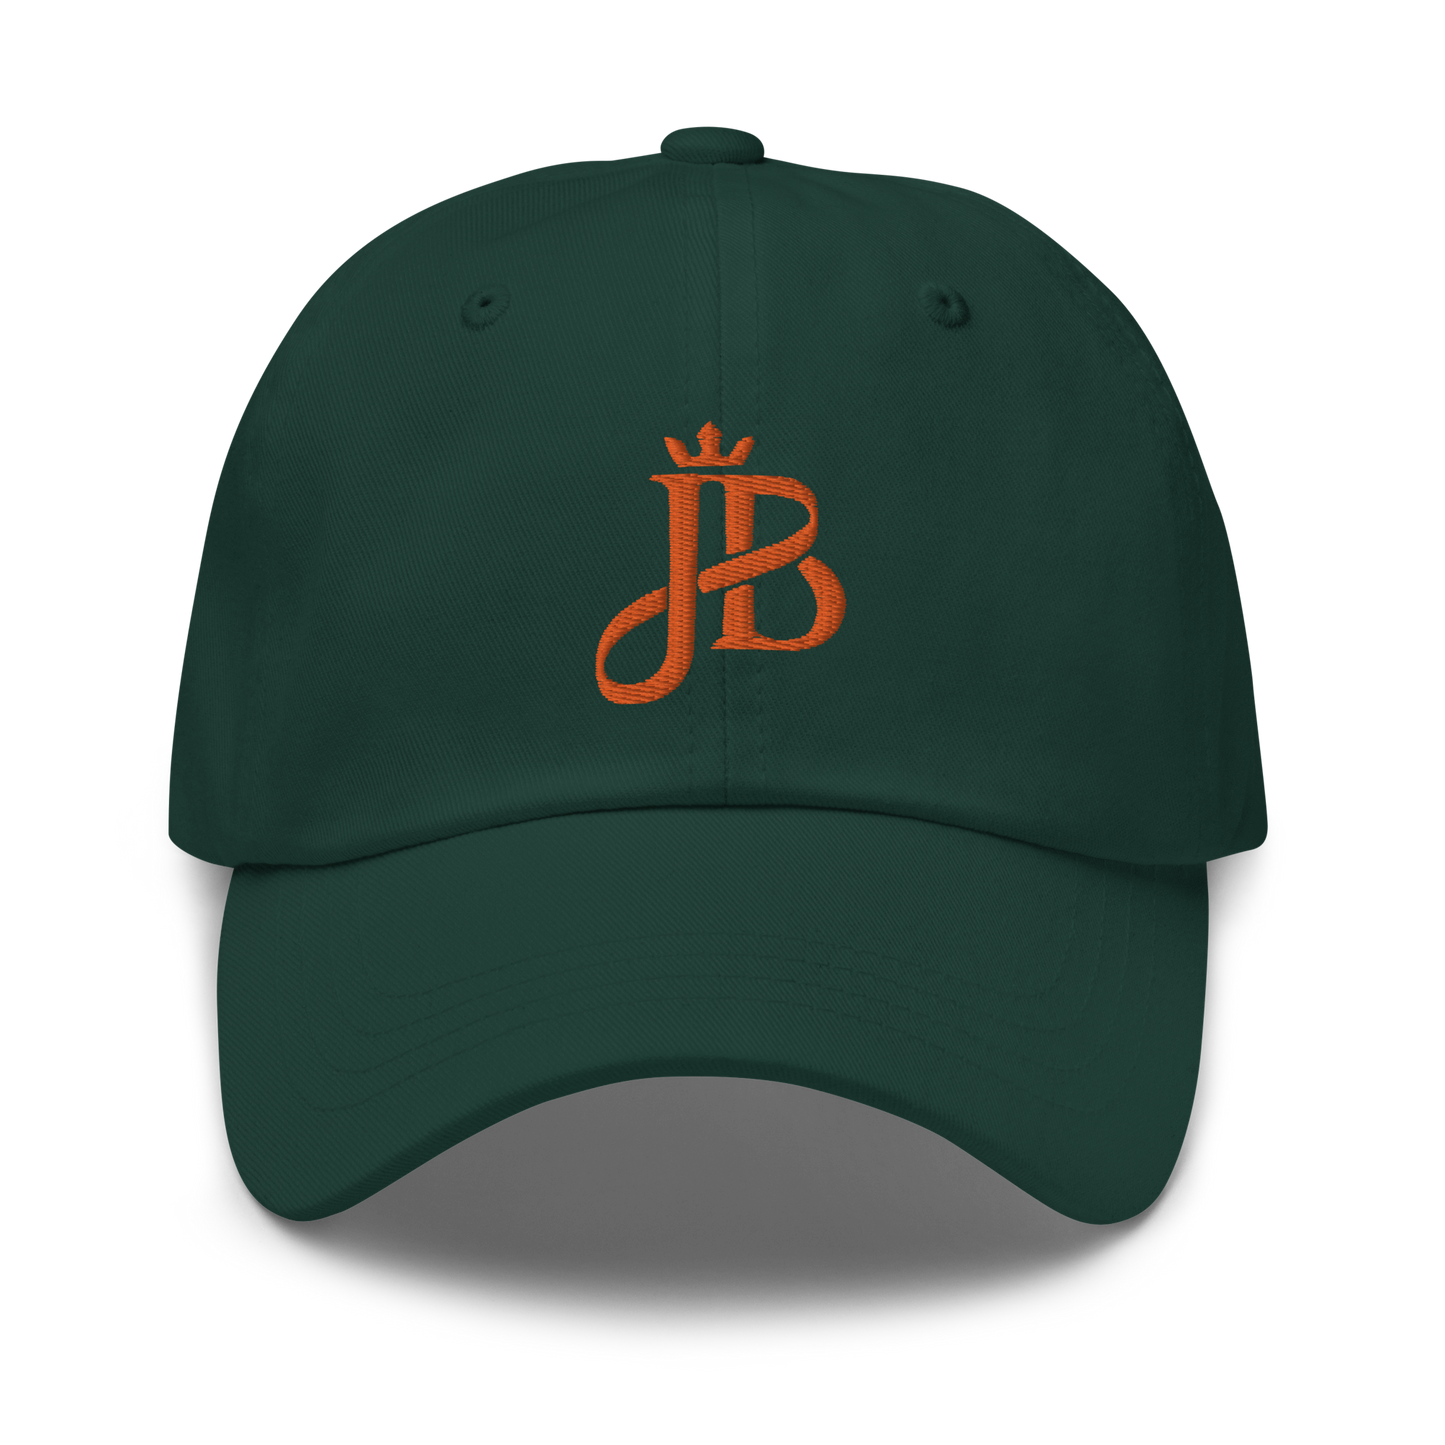 JACURRI BROWN PERFORMANCE CAP